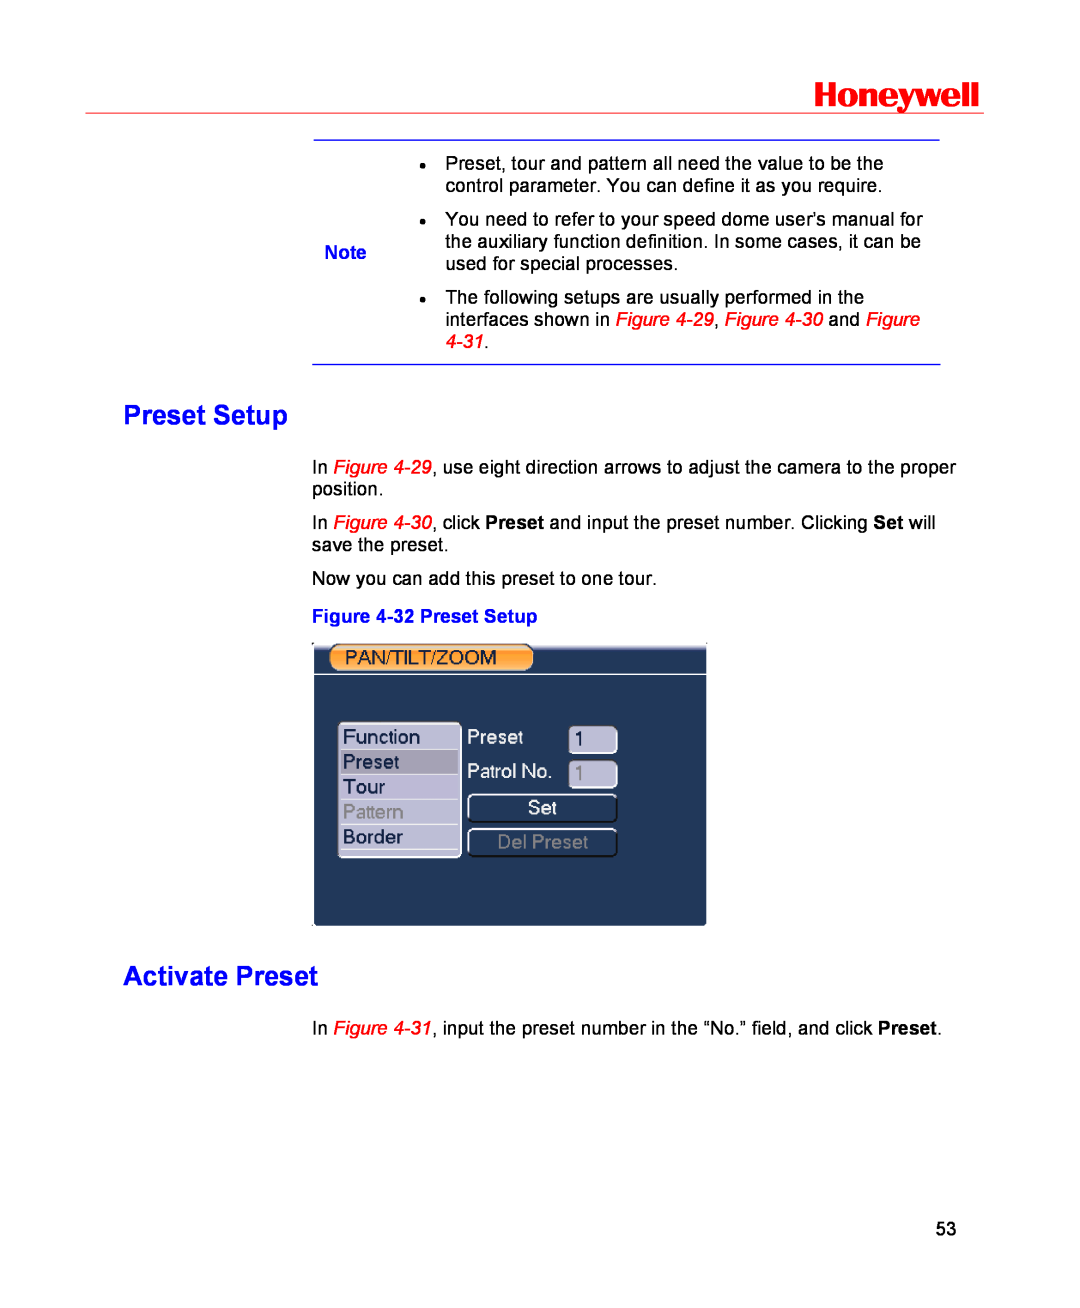 Honeywell HSVR-16, HSVR-04 Preset Setup, Activate Preset, Honeywell, interfaces shown in -29 , -30 and Figure, 4-31 